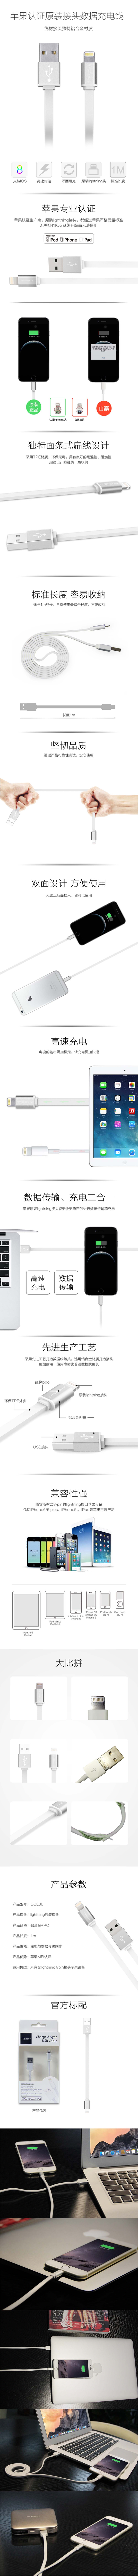 MIPOW 苹果数据线 1米 适用iPhone5S/6/plus/iPadAir/mini 浅灰色